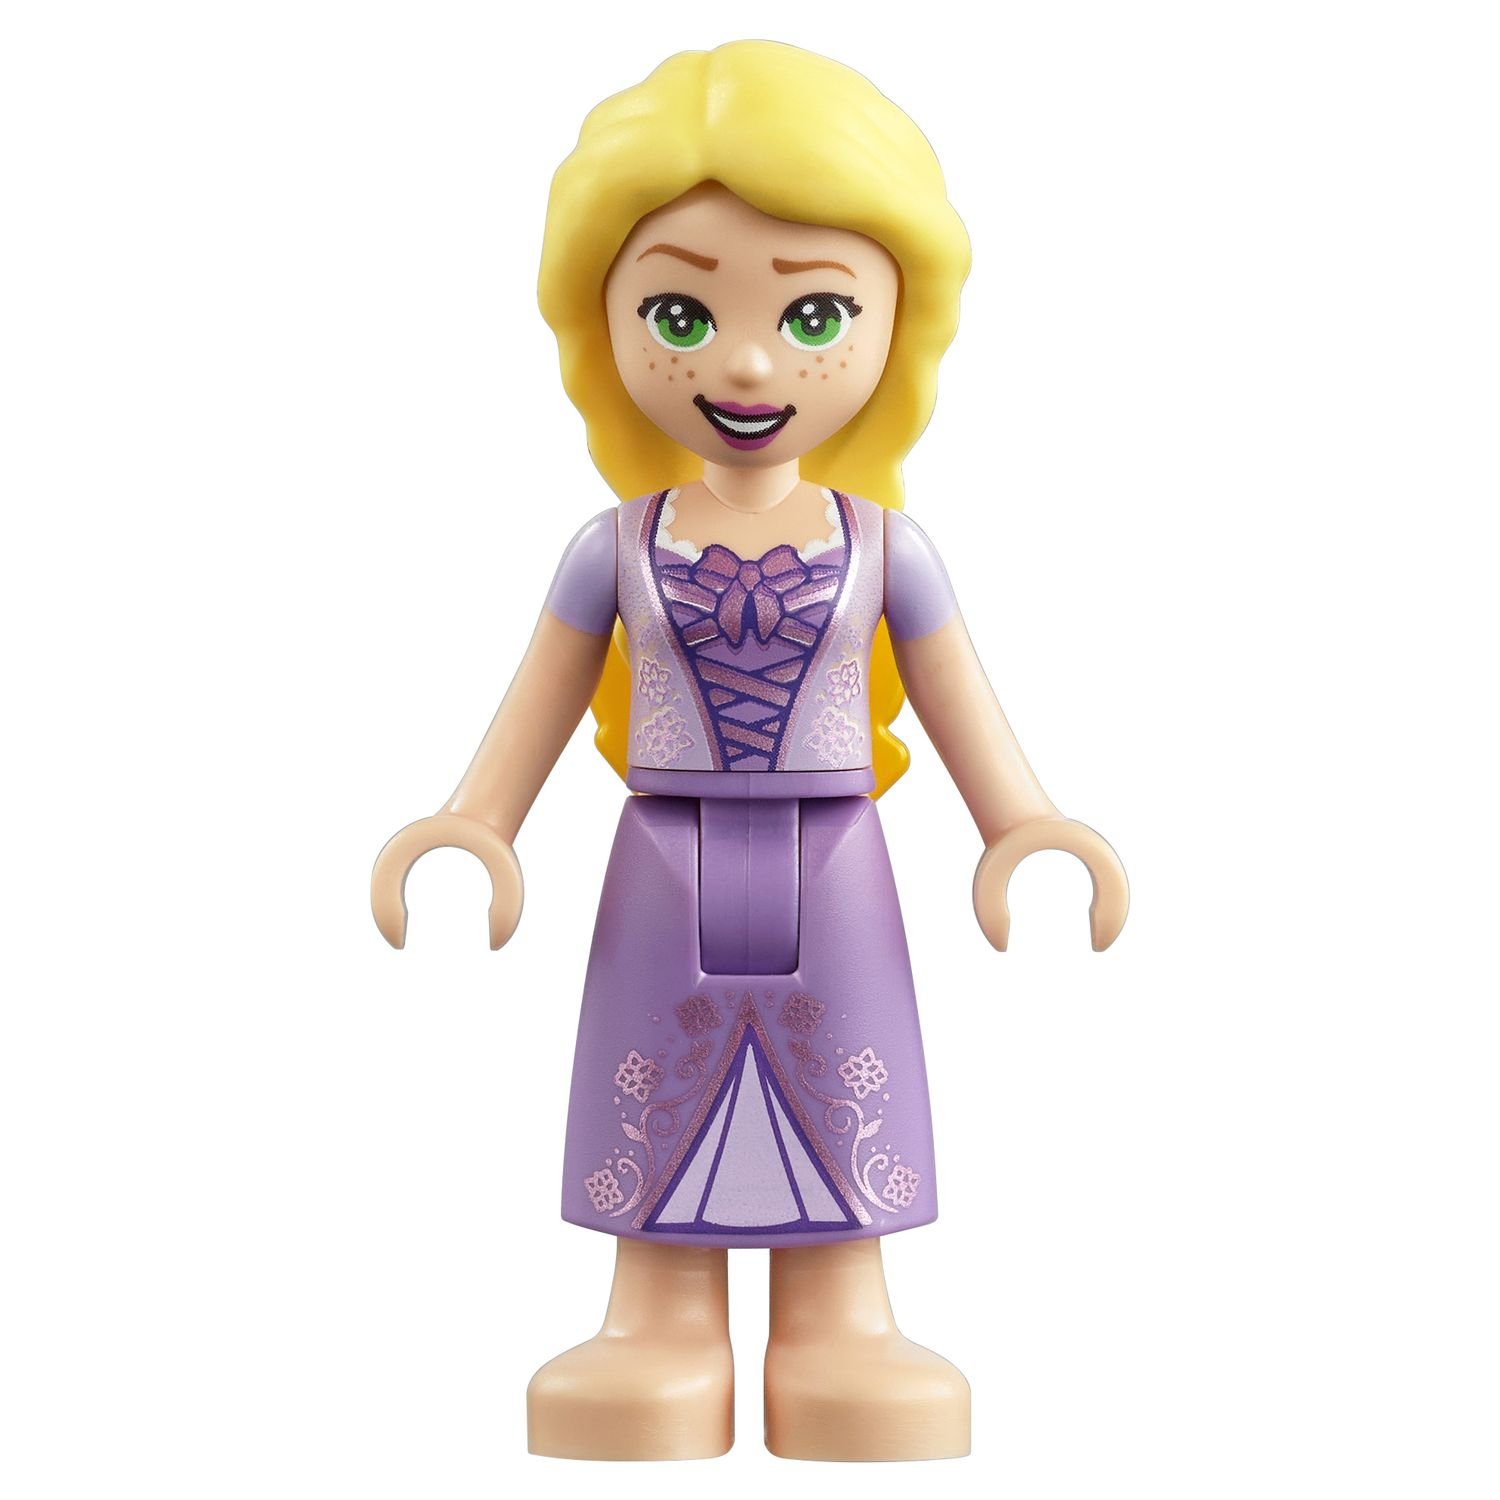 Lego Disney Princess 43187 Башня Рапунцель